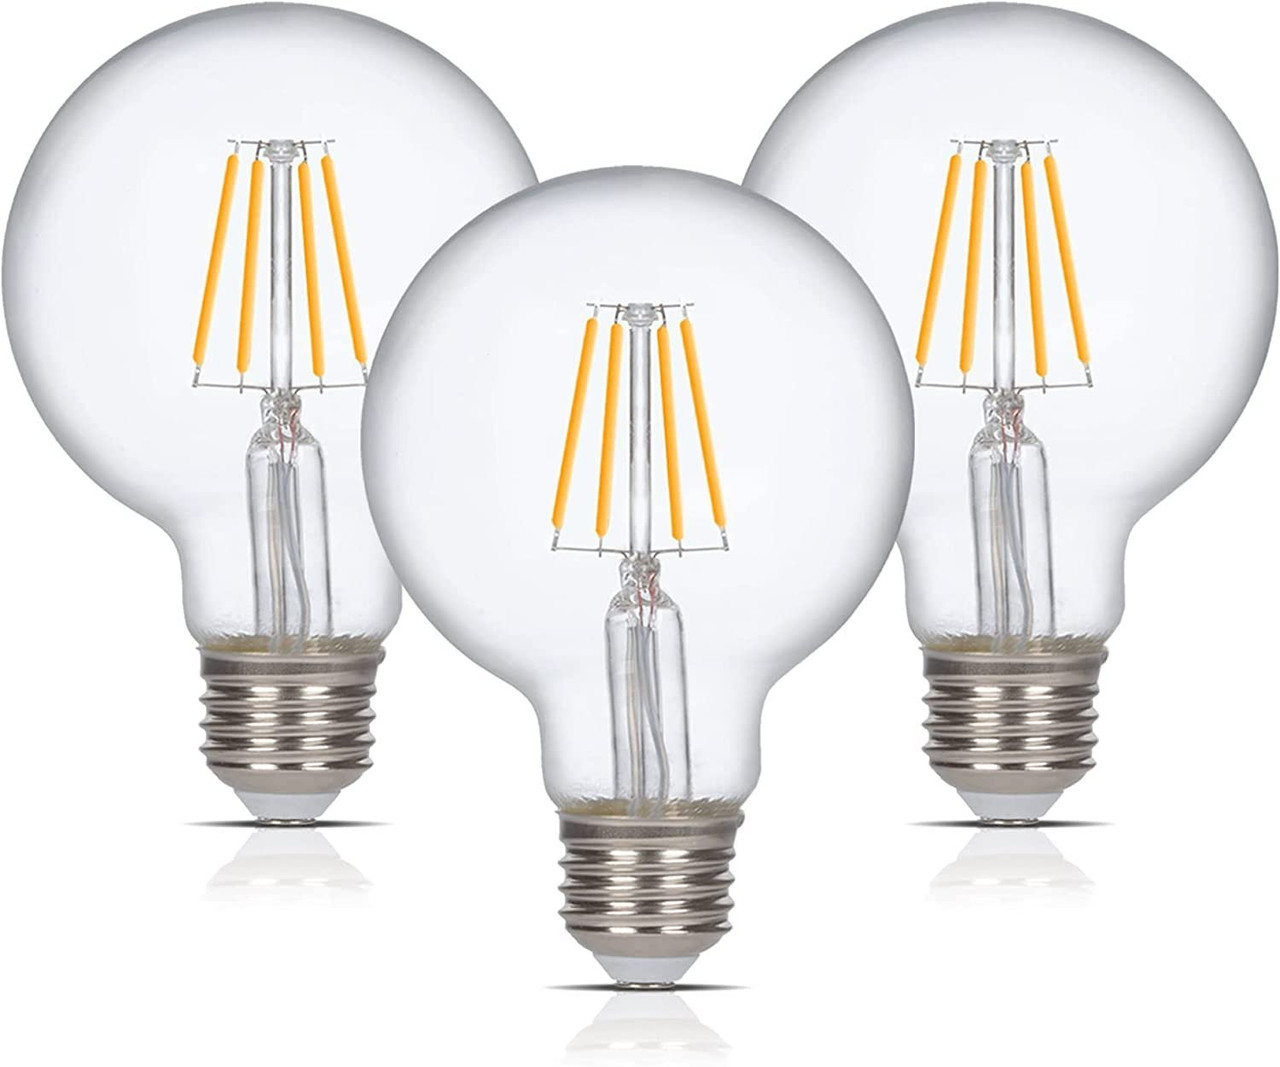 HUSTUNG Lampadine LED E27, Dimmerabile Lampadina LED 4W (Equivalente a 40W)  G80 Edison Vintage Lampadina LED E27 Luce Calda 2700K - Ambra, Pacco da 2 :  .it: Illuminazione